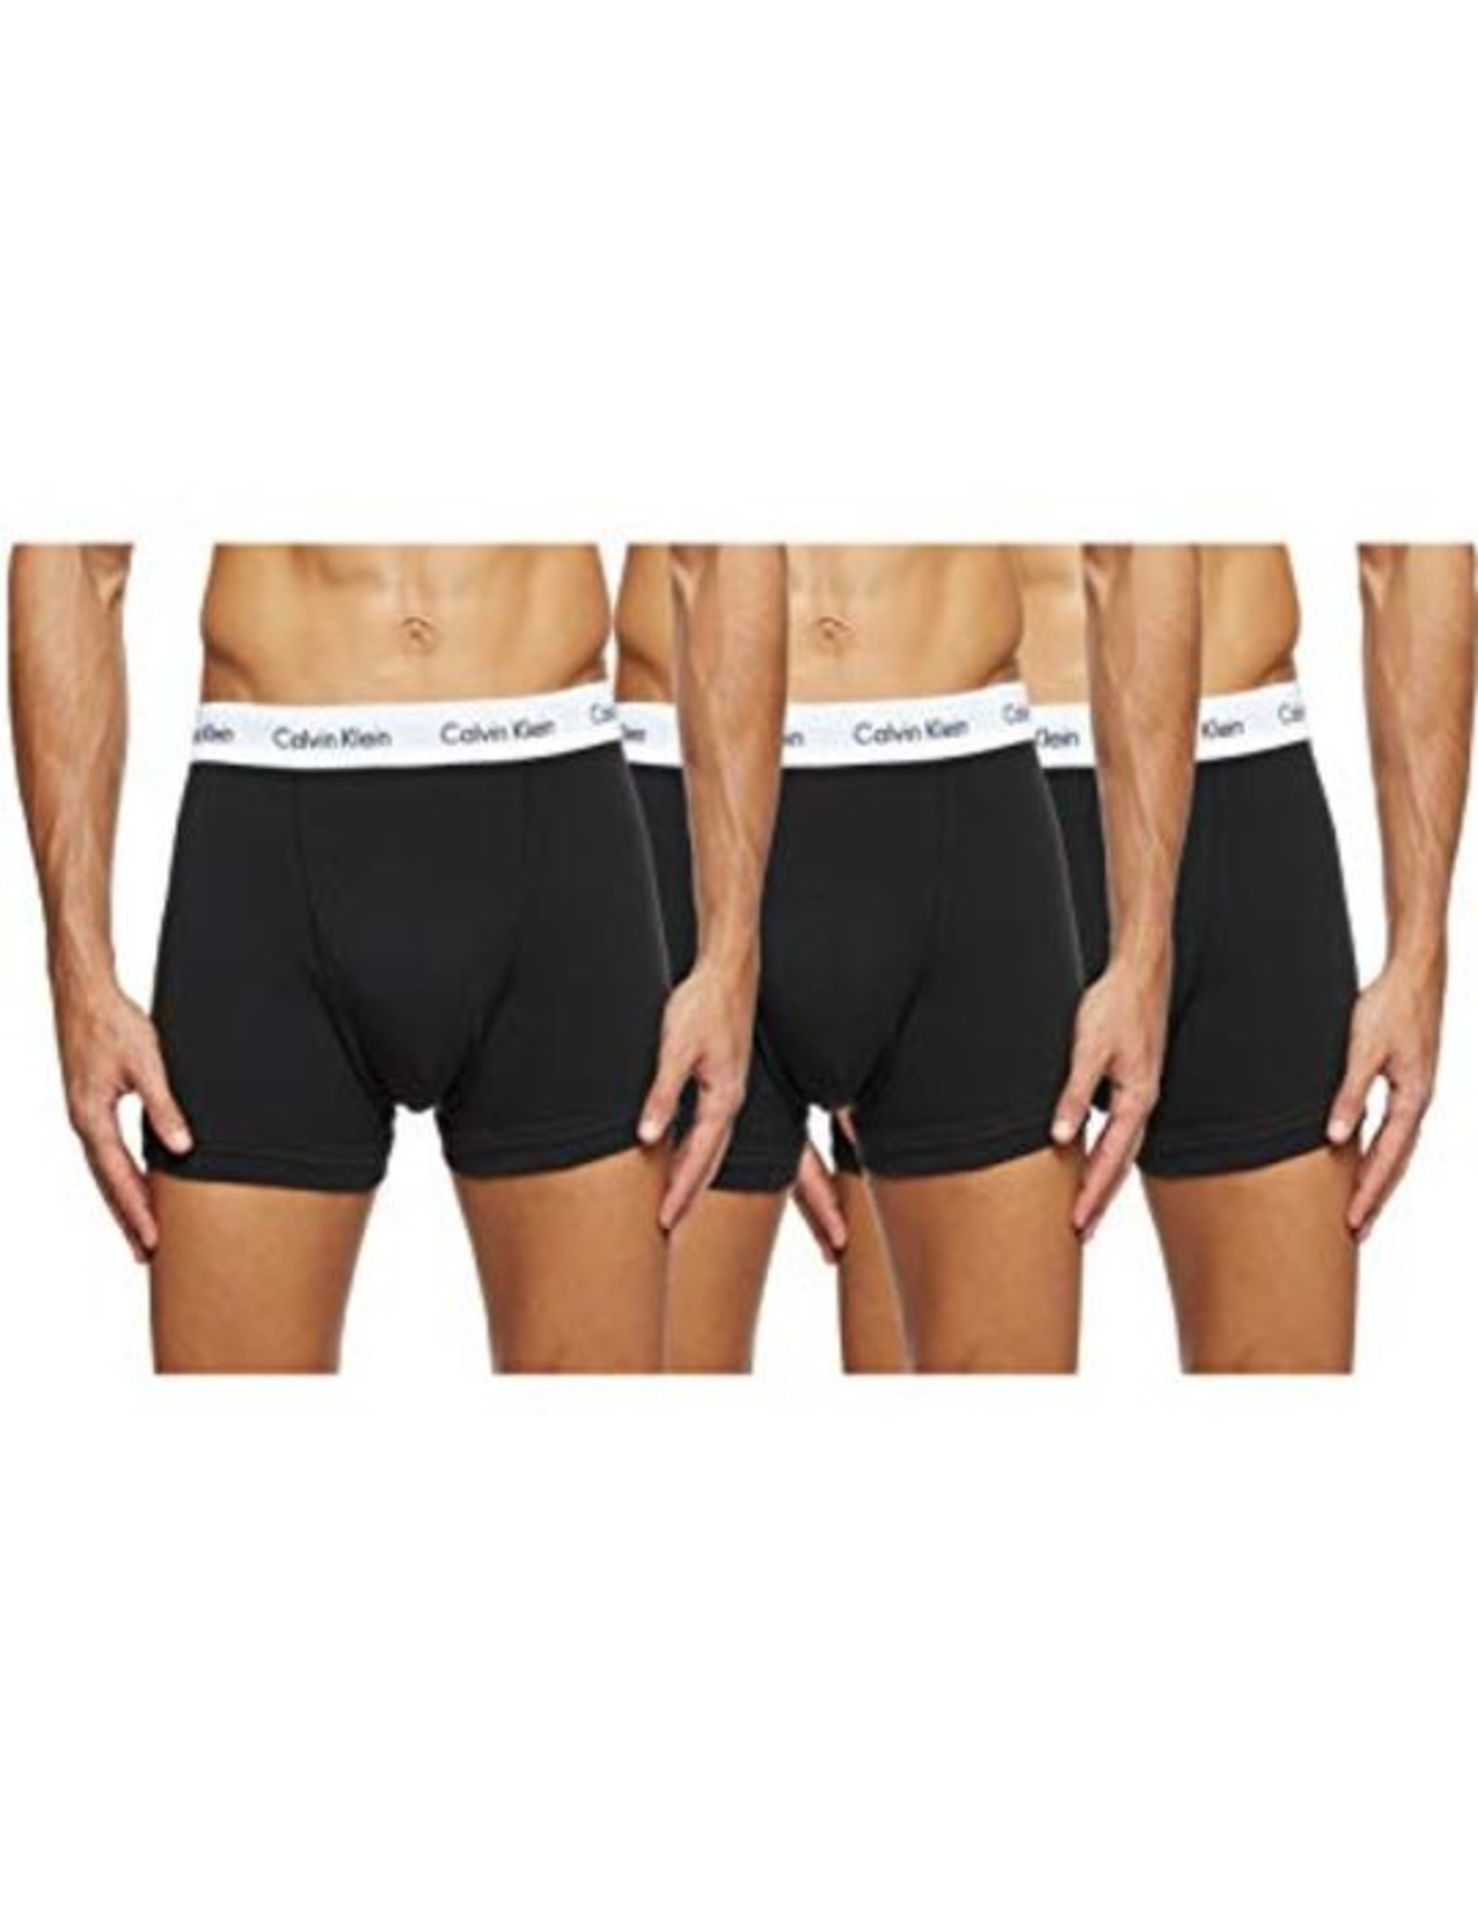 Calvin Klein Men's 3 Pack Trunks-Cotton Stretch Boxers, Black, M